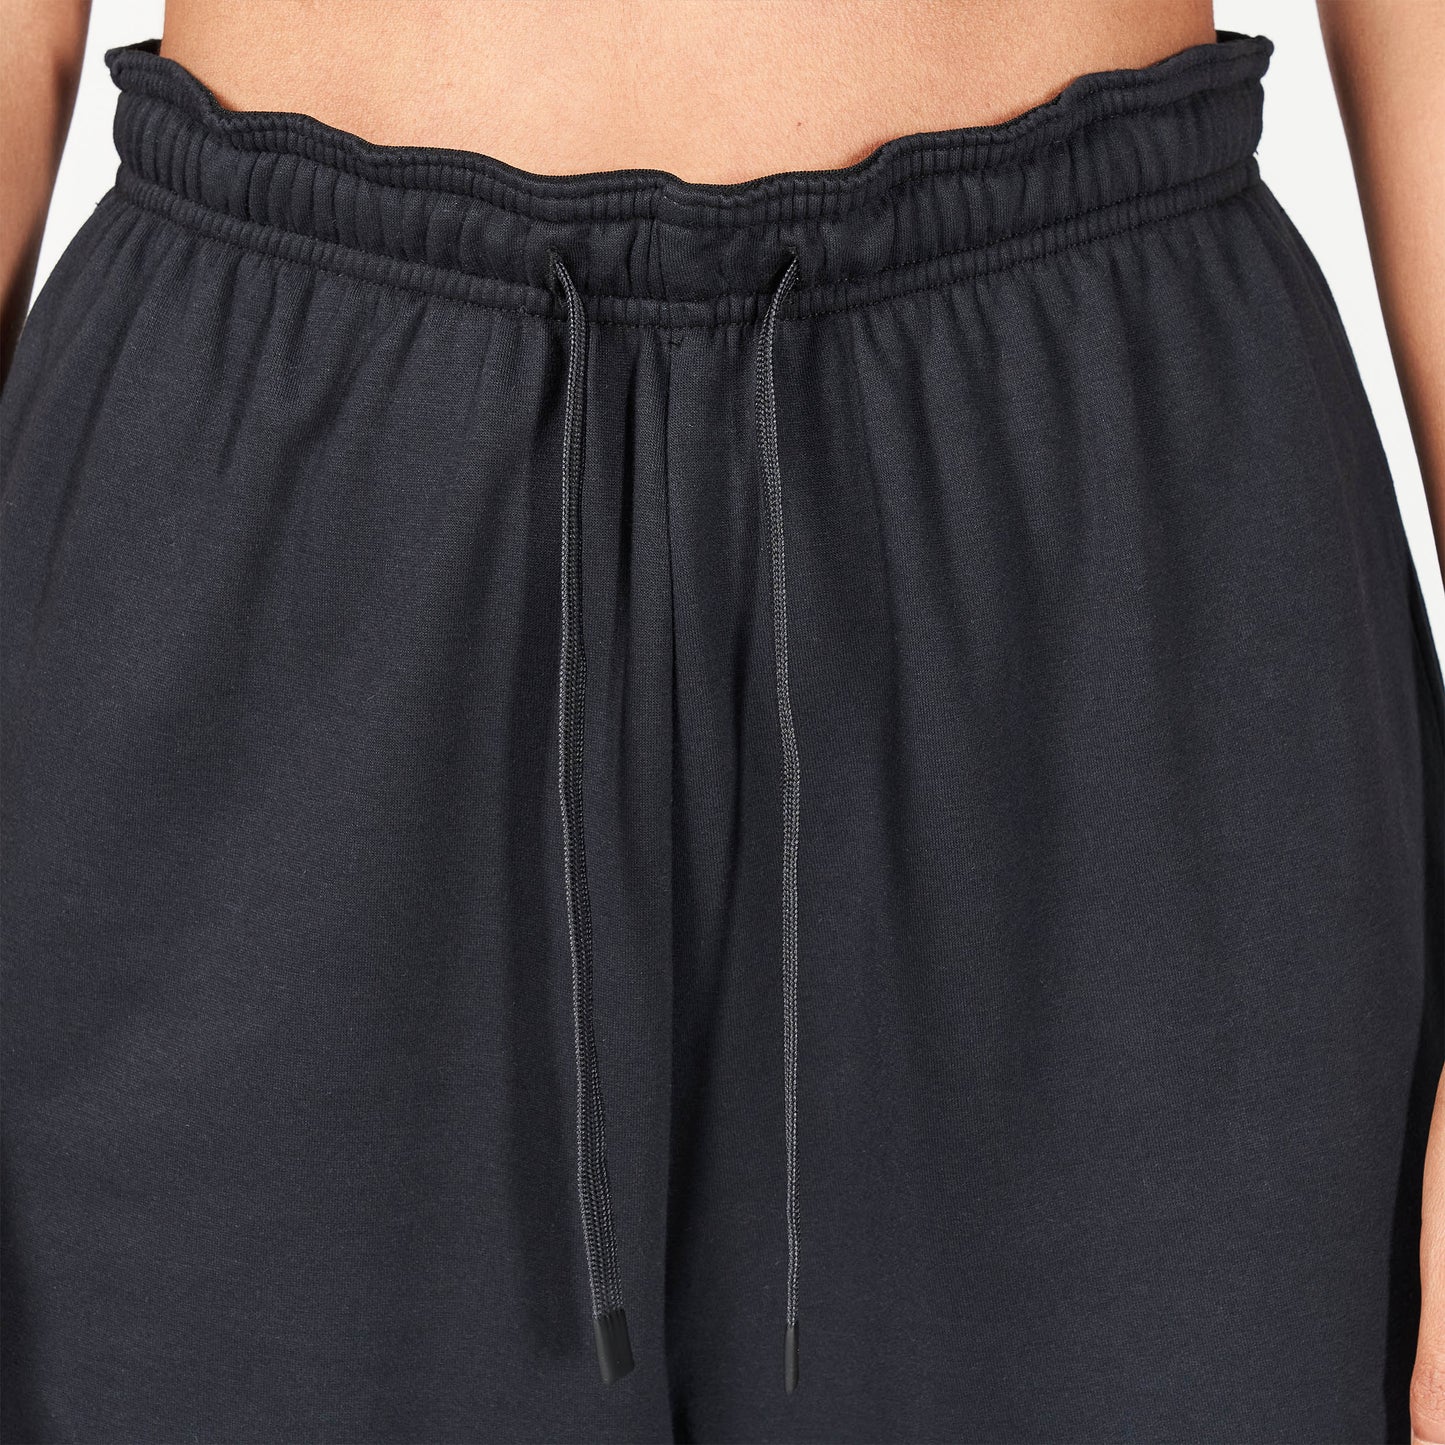 squatwolf-workout-clothes-waistband-surprise-joggers-black-gym-pants-for-women